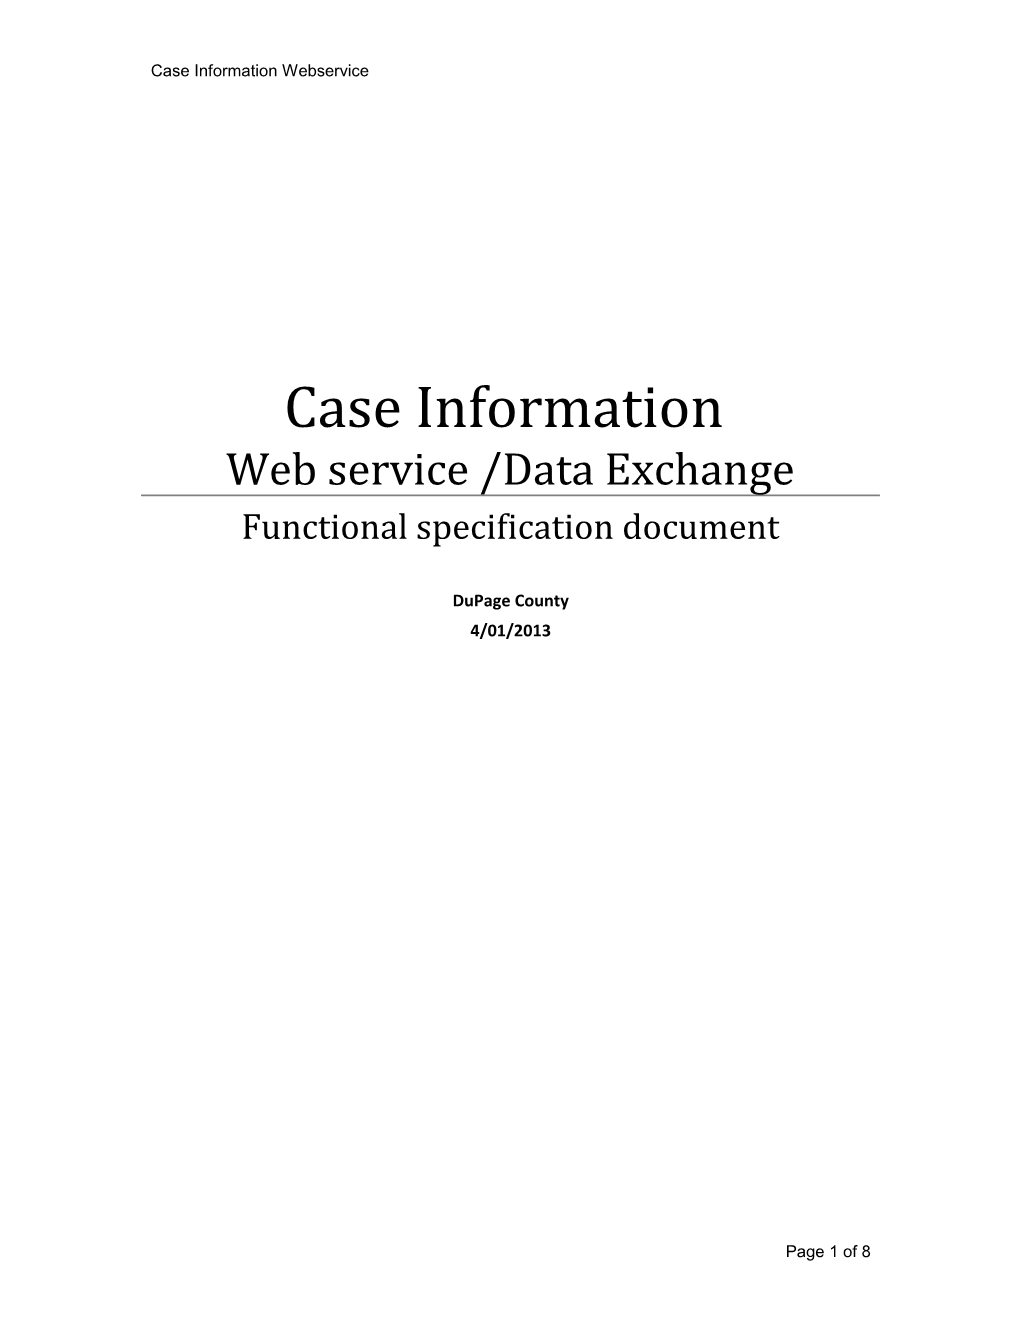 Case Informationwebservice